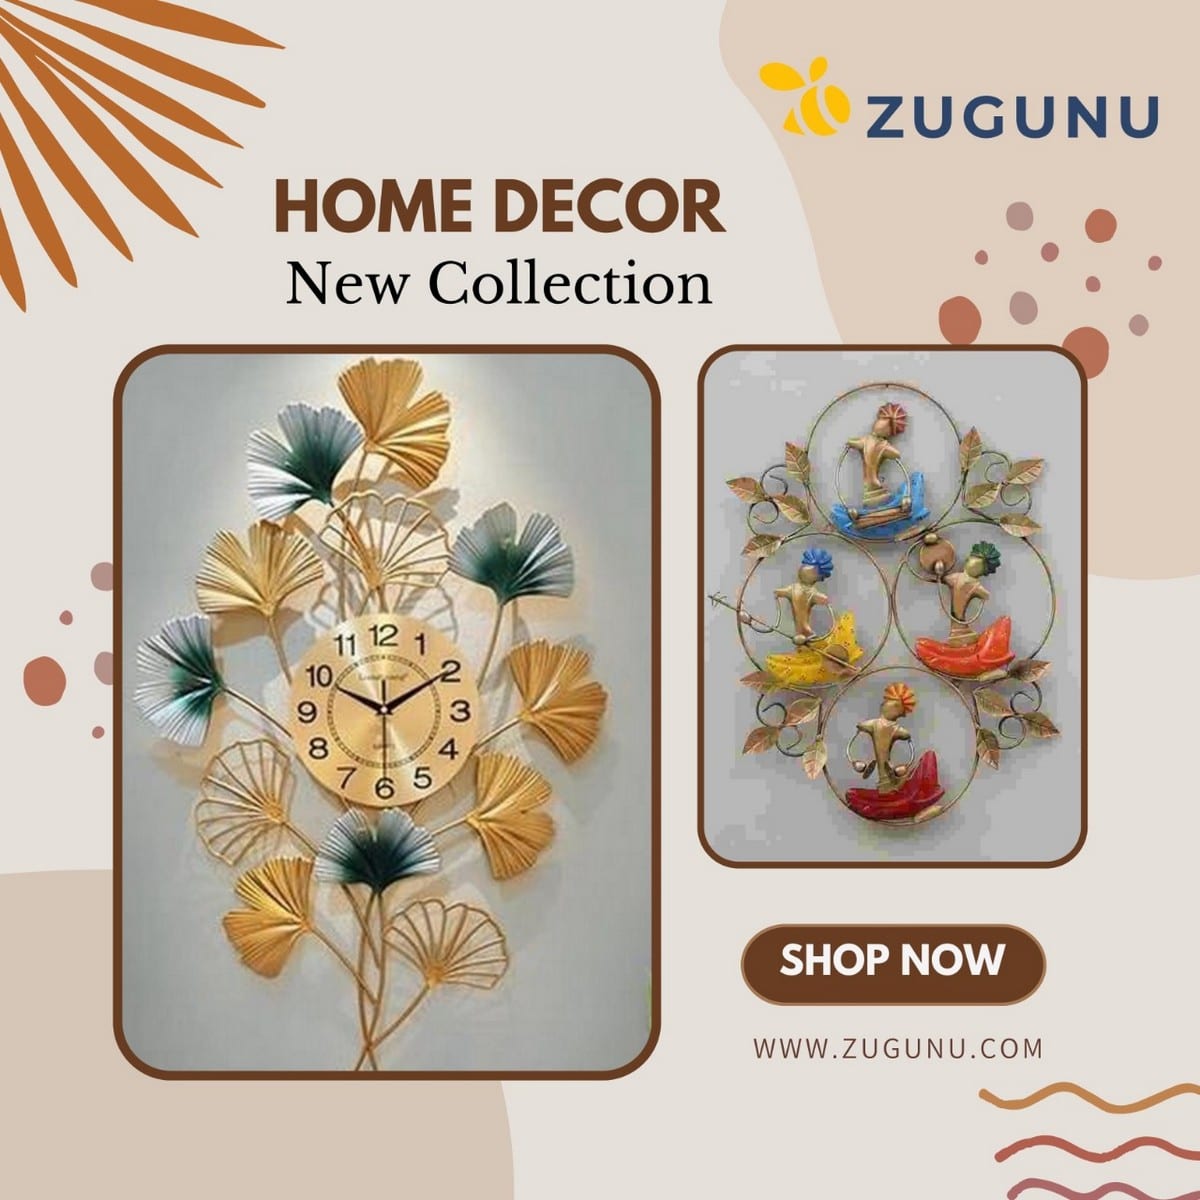 Zugunu New Home Decor Collection